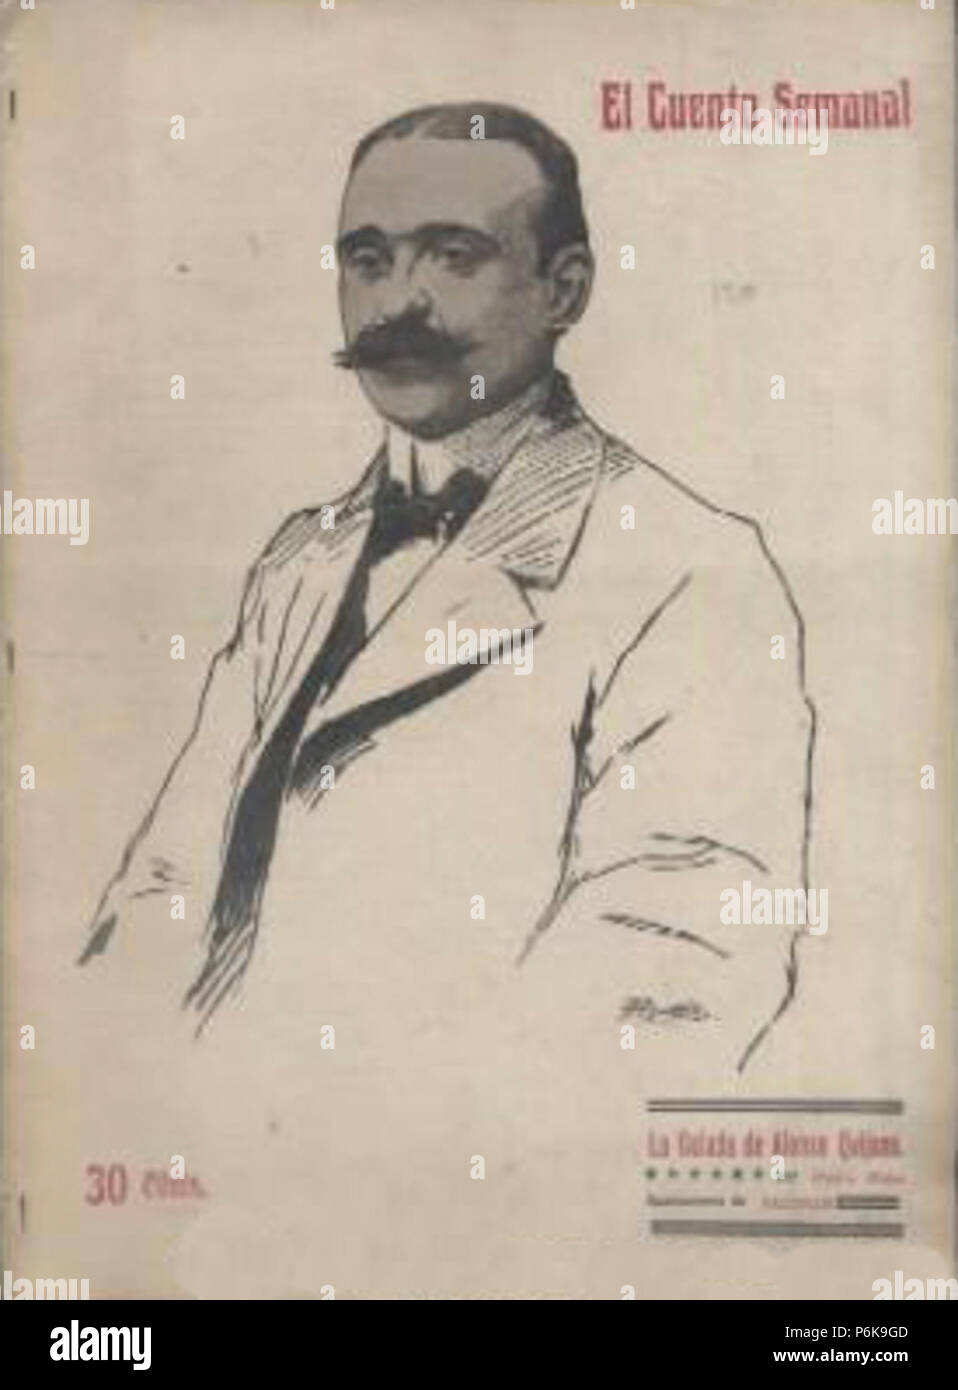 1909-04-16 El Cuento Semanal La celada de Alonso Quijano de Pedro Mata Agustín nº120. Stock Photo